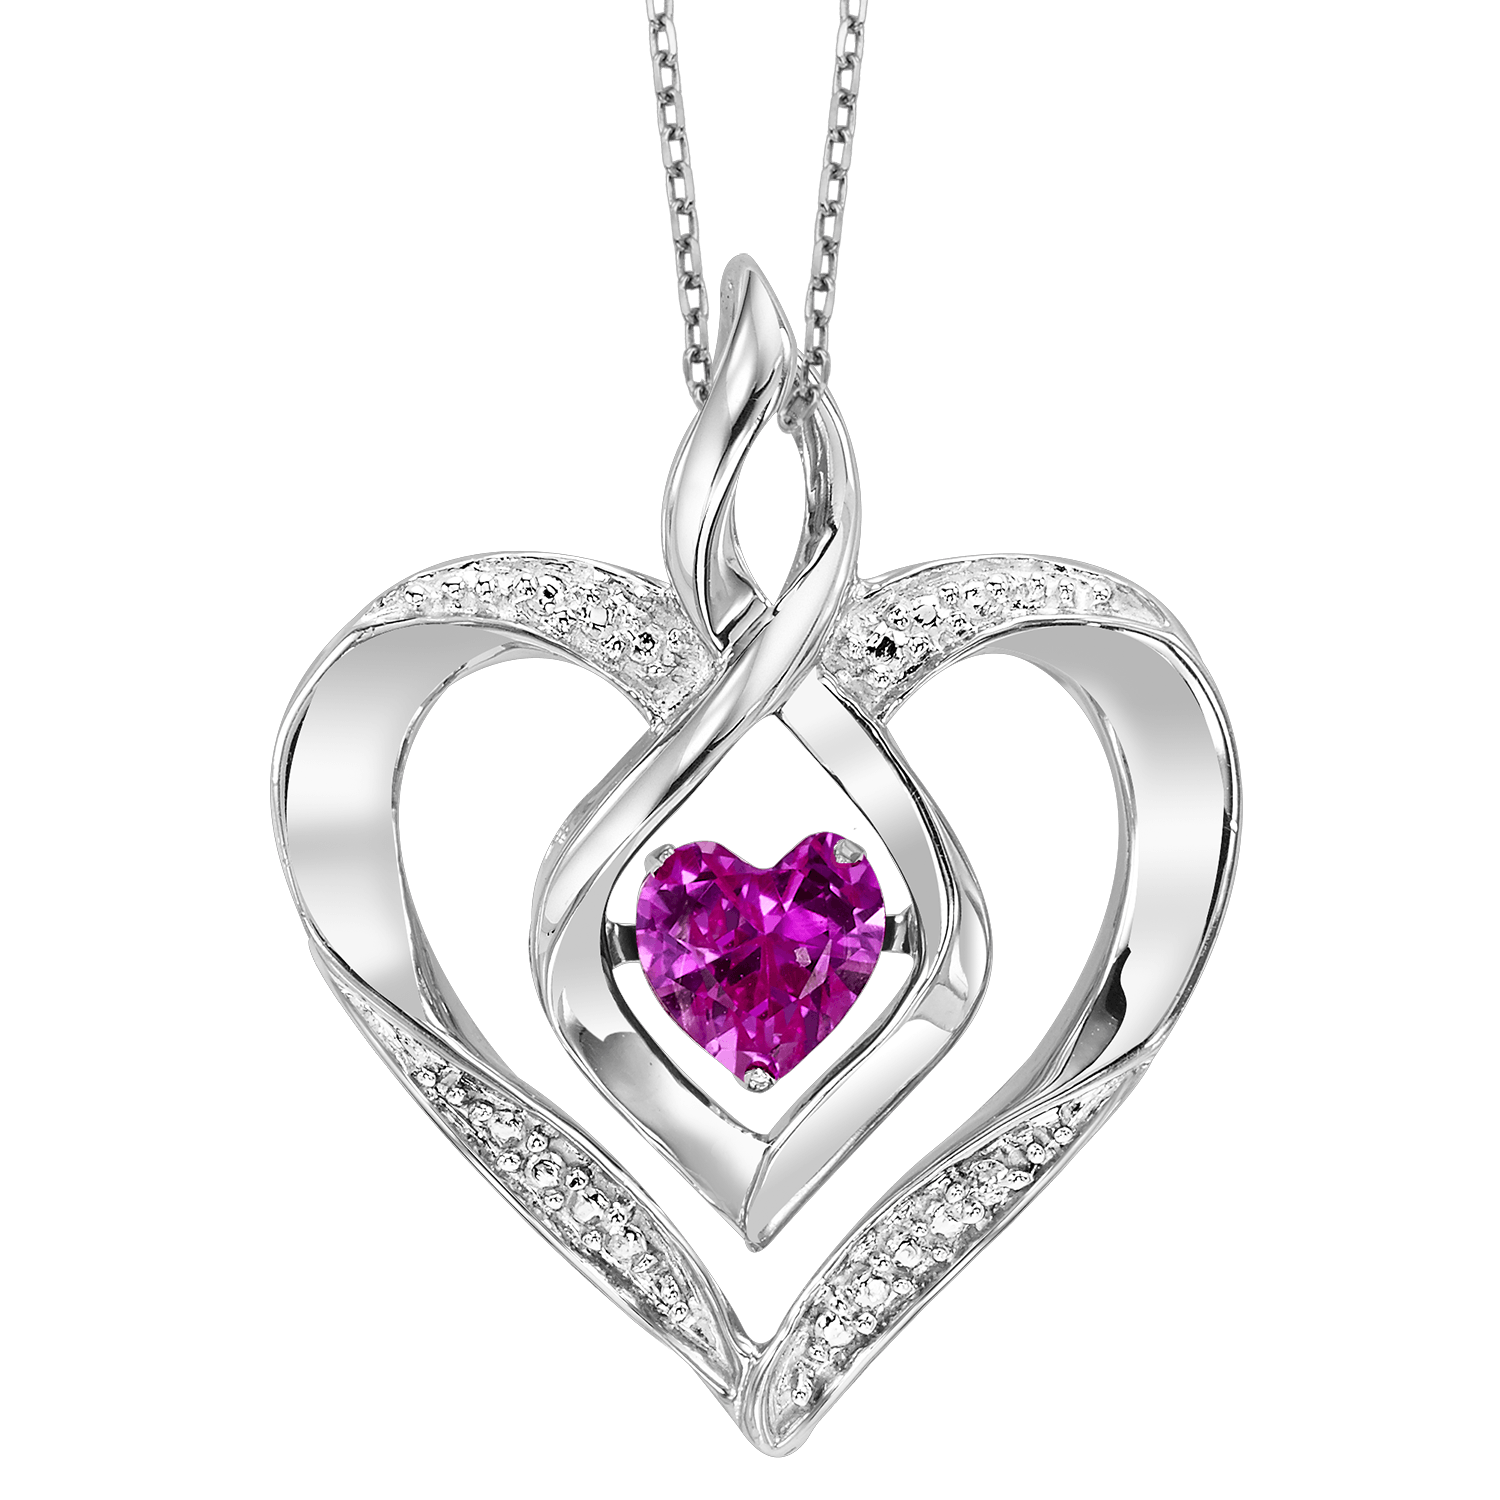 BW James Jewelers Pendant 16 Page Christmas Catalog Offer SS Diamond ROL-Birthst Heart Pink Tourmaline Basics Pendant 1/250Ct